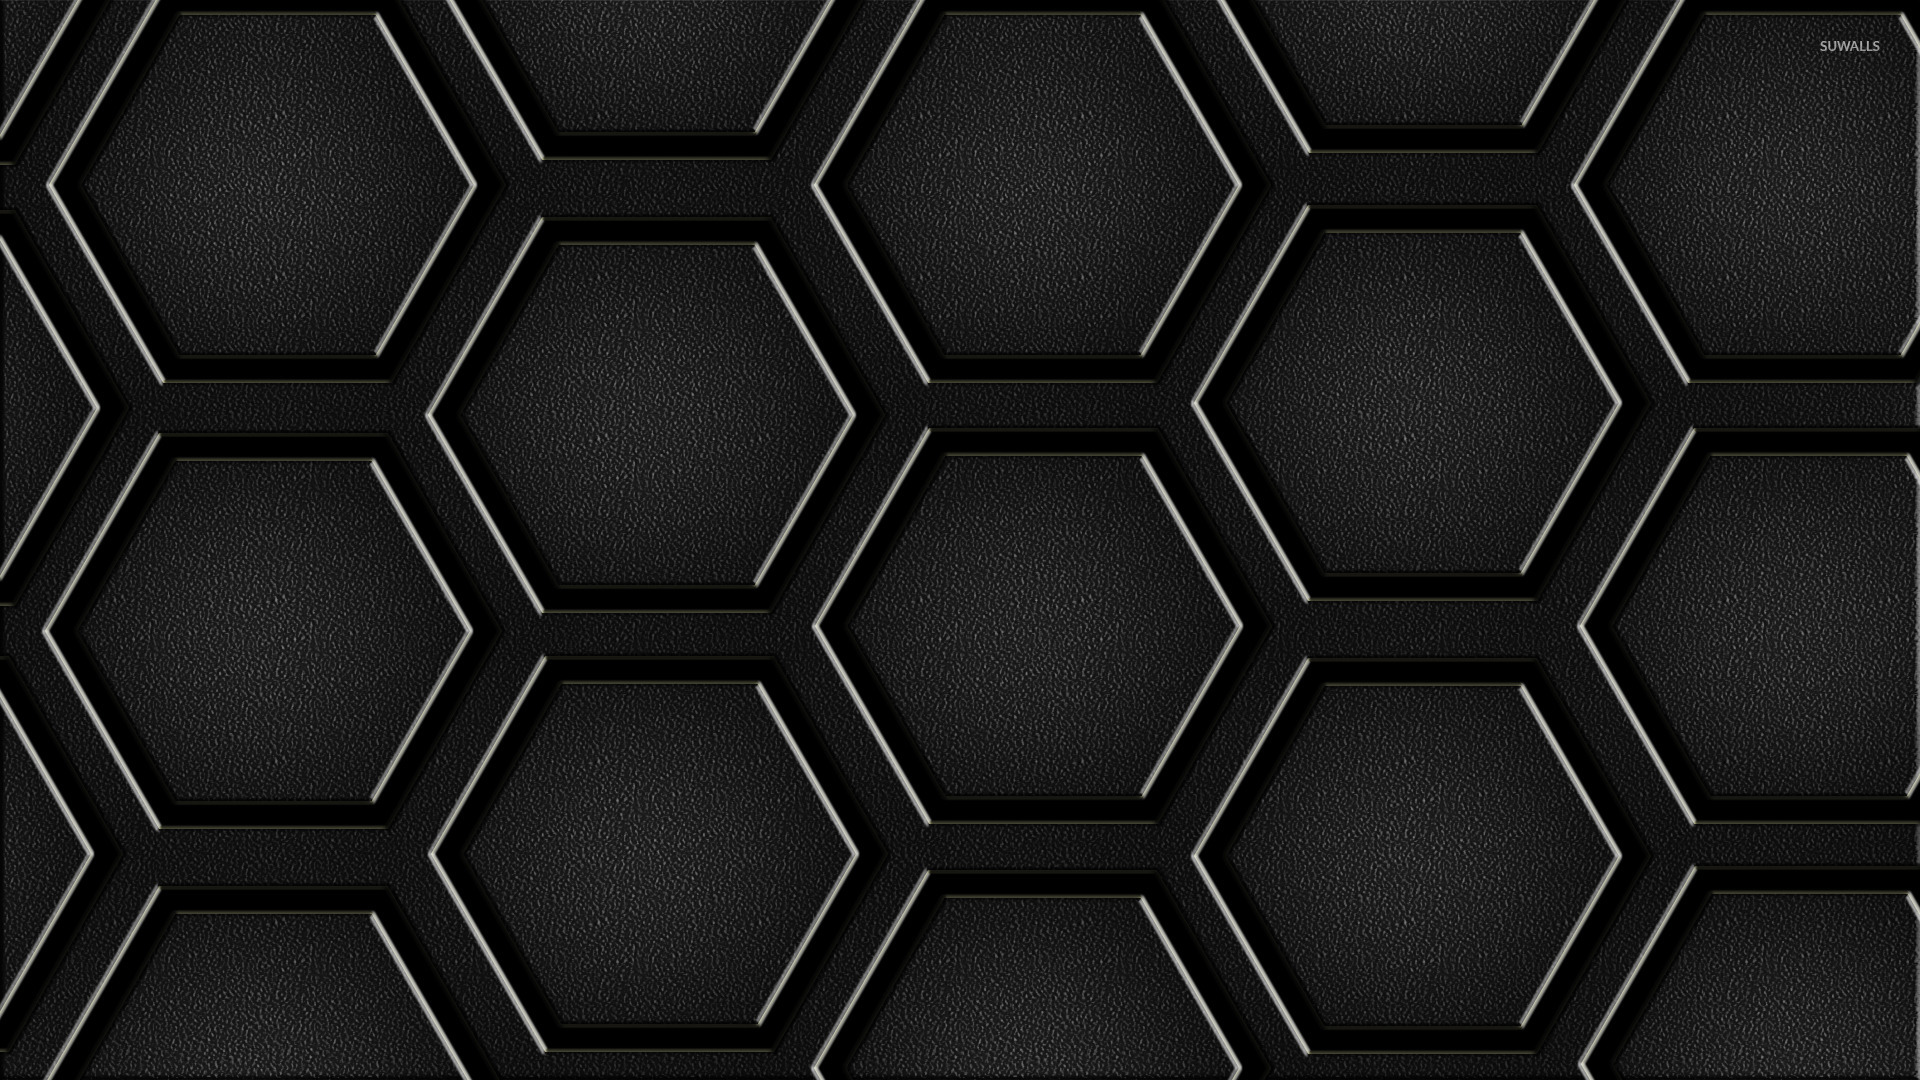 Hexagon pattern wallpaper - Abstract wallpapers - #36089